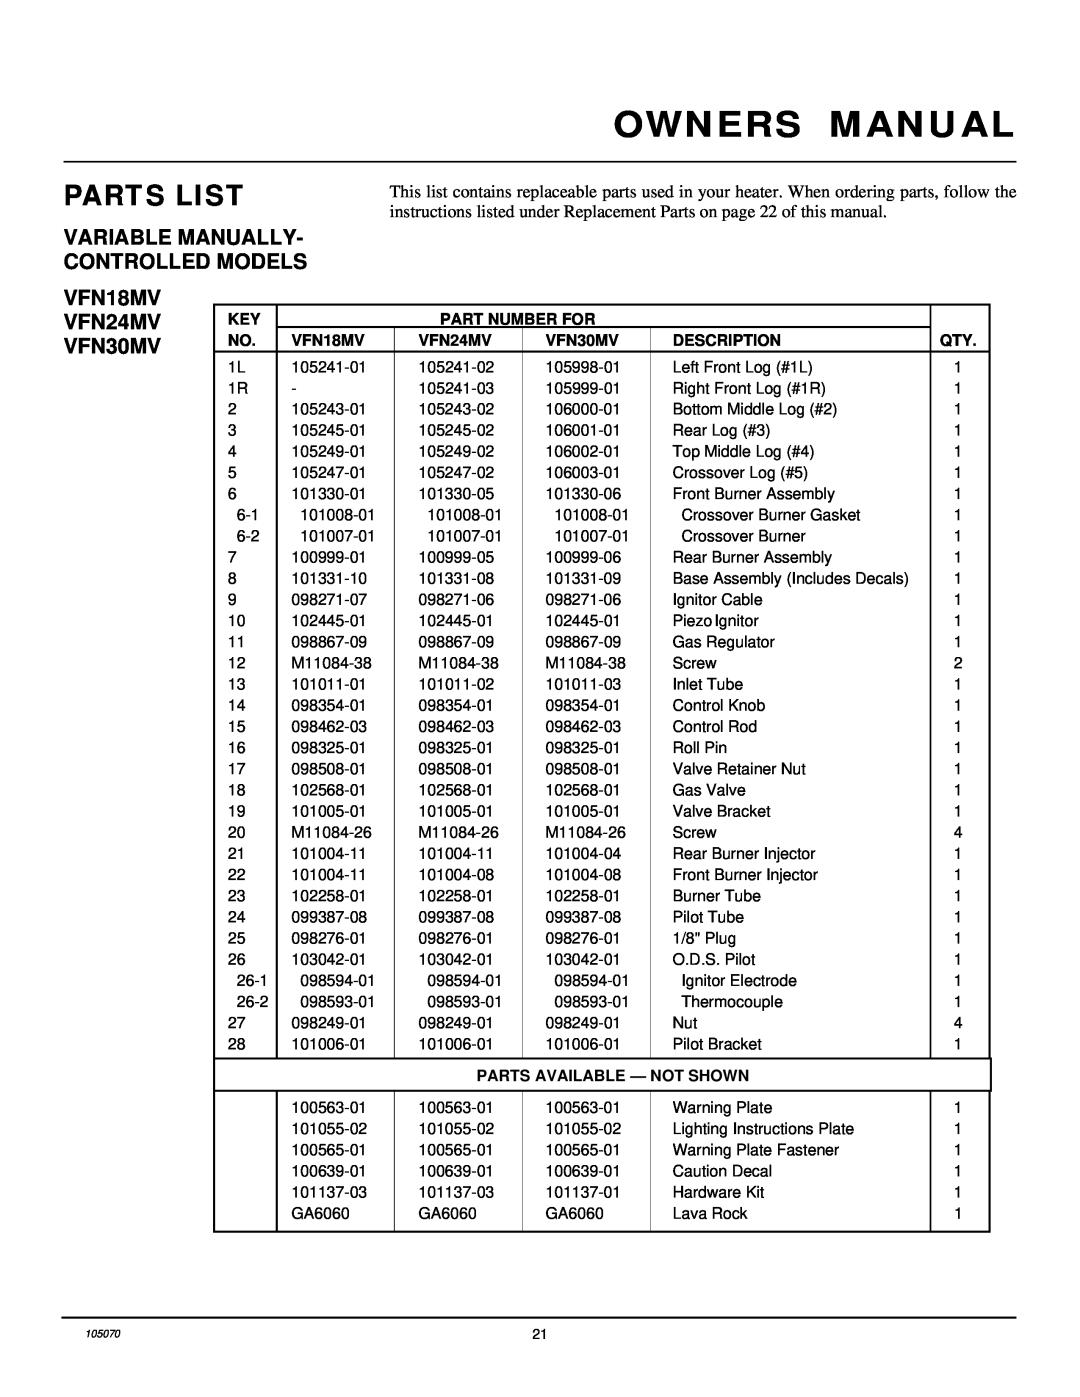 Desa Parts List, Variable Manually- Controlled Models, VFN18MV VFN24MV VFN30MV, Part Number For, Description 